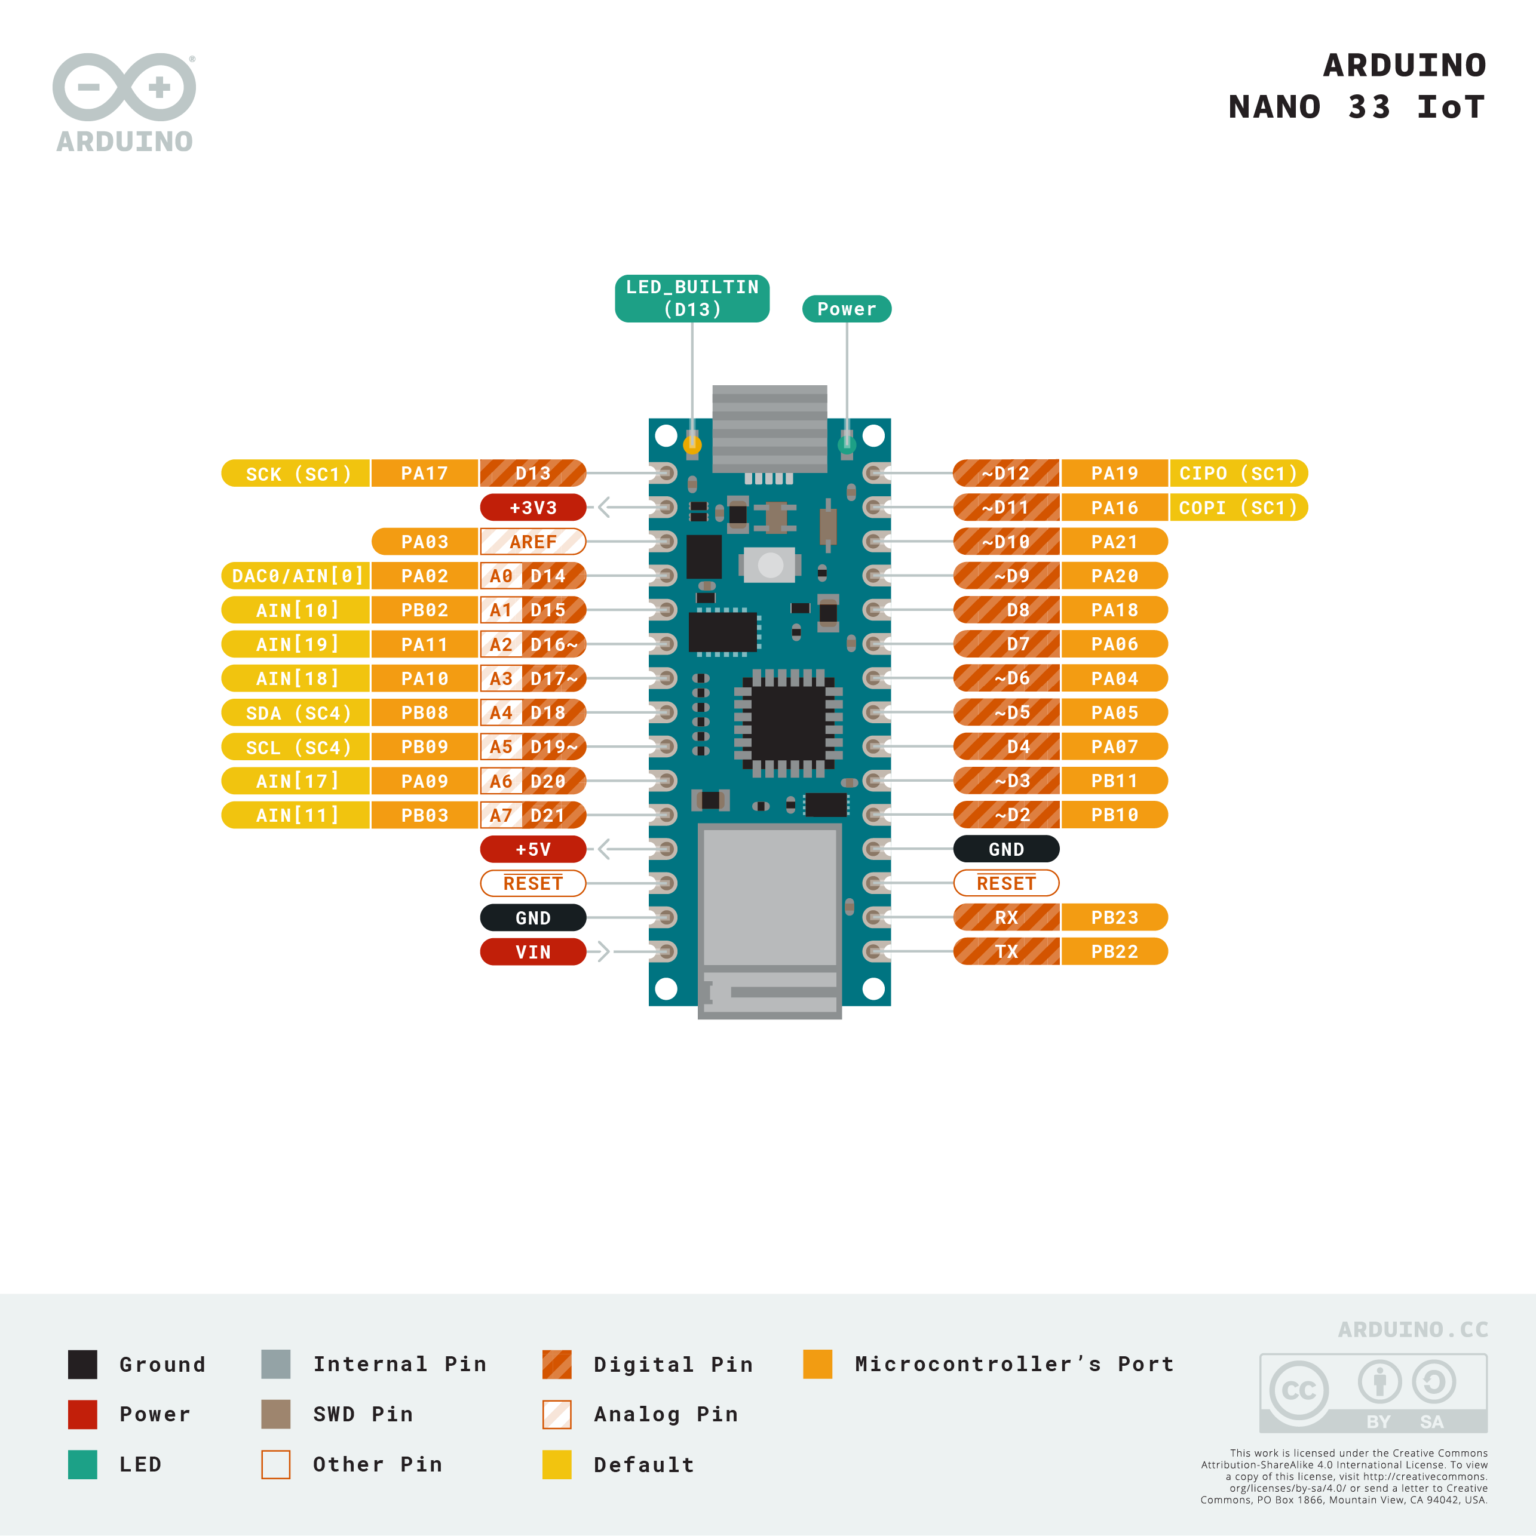 Pin out diagram of the Arduino Nano 33 IoT